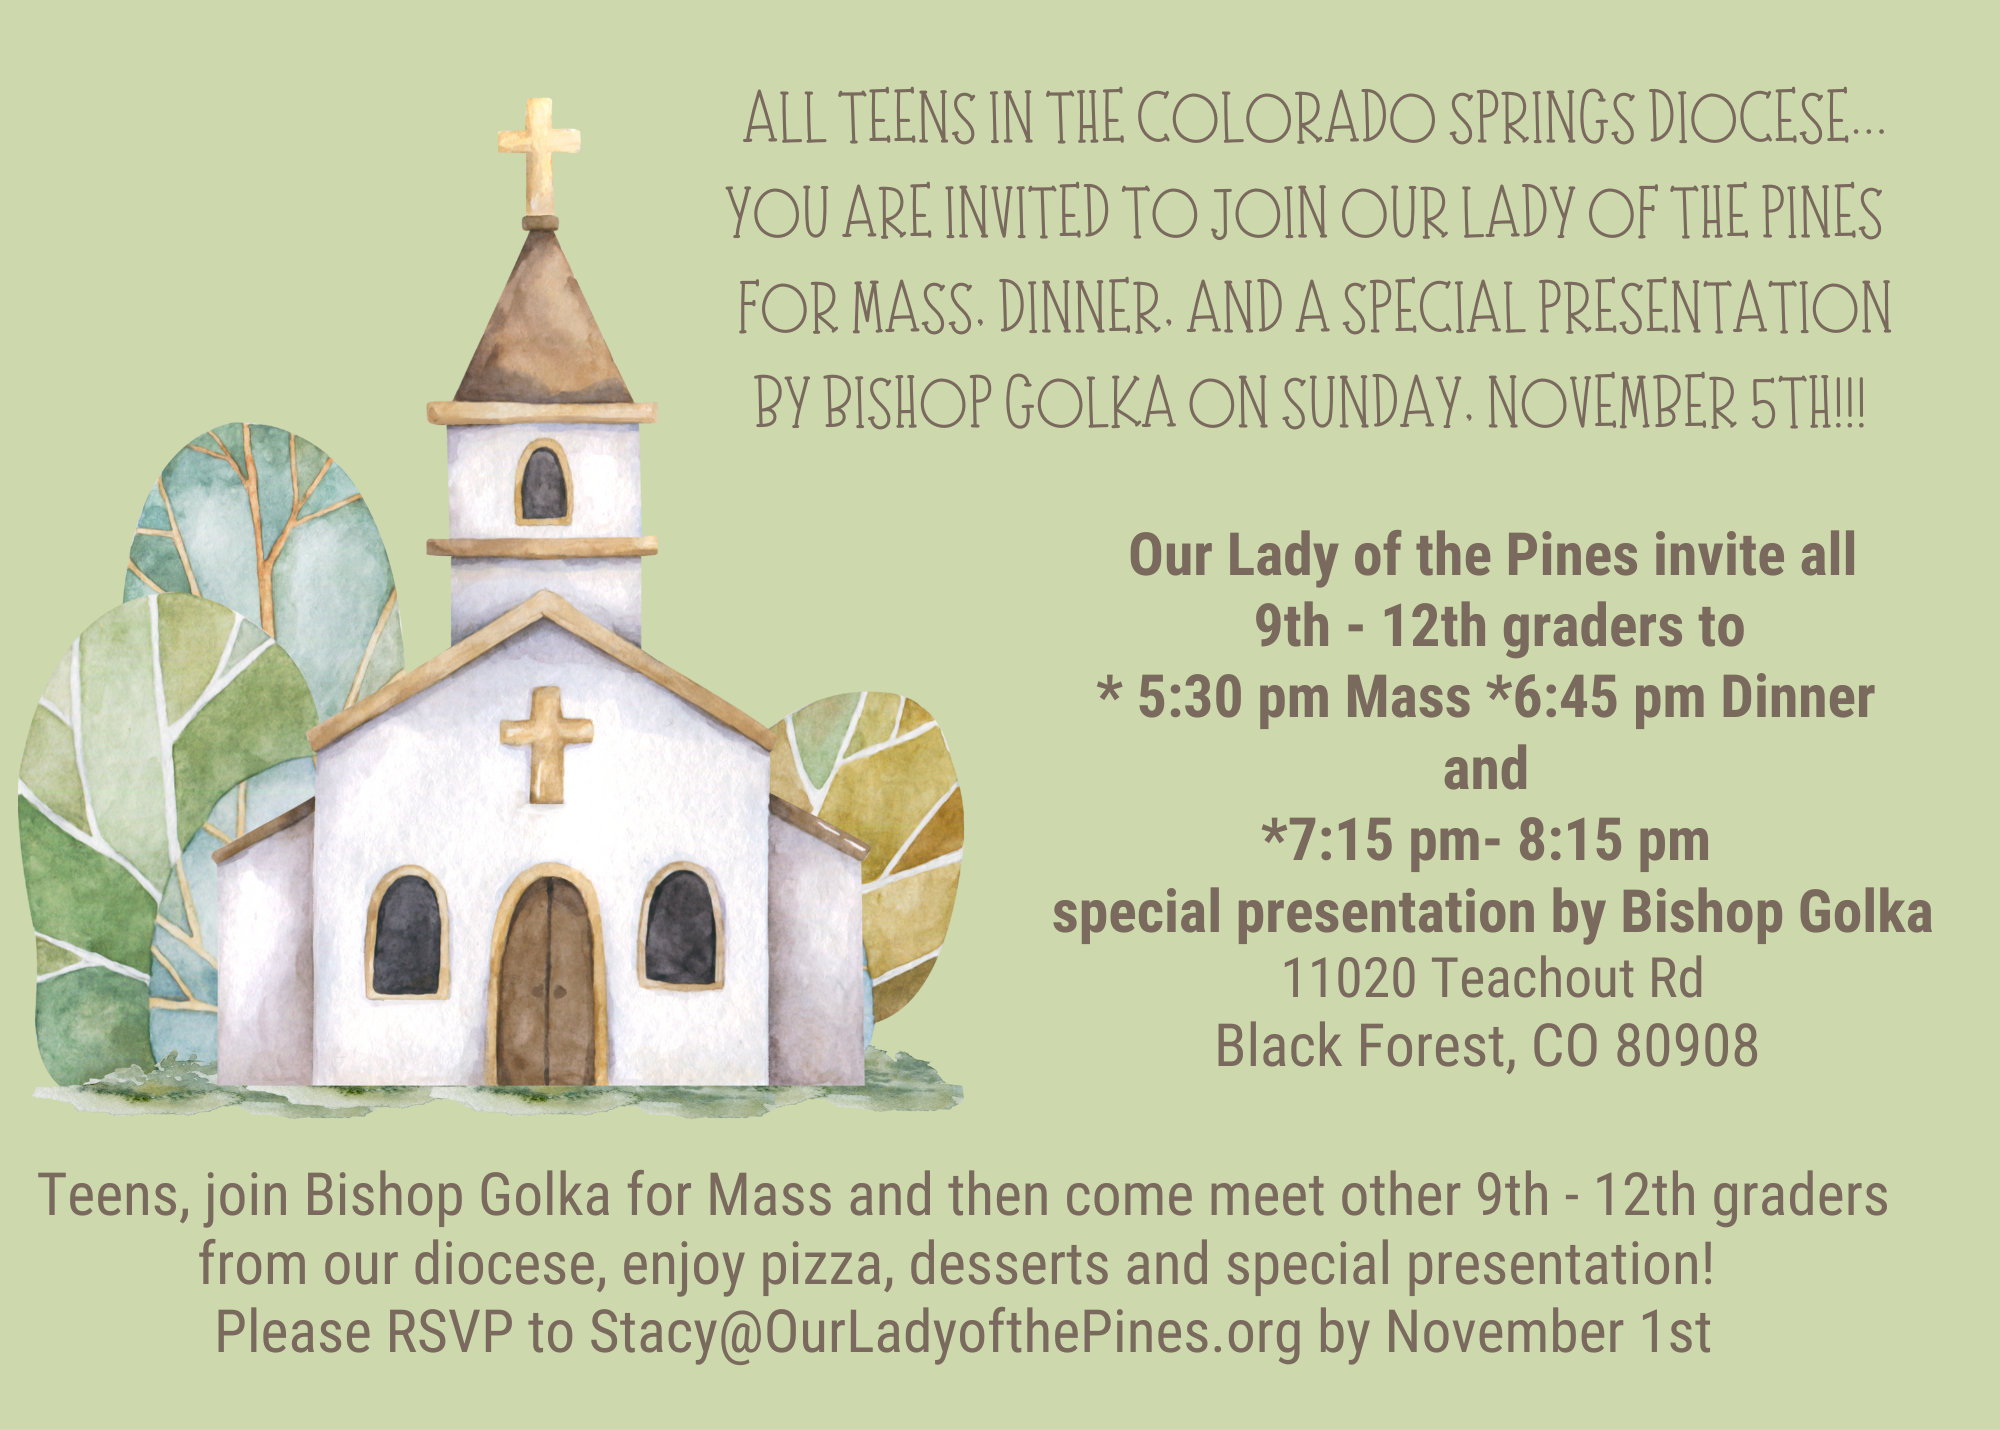 Mass, Dinner, and Presentation with Bishop Golka